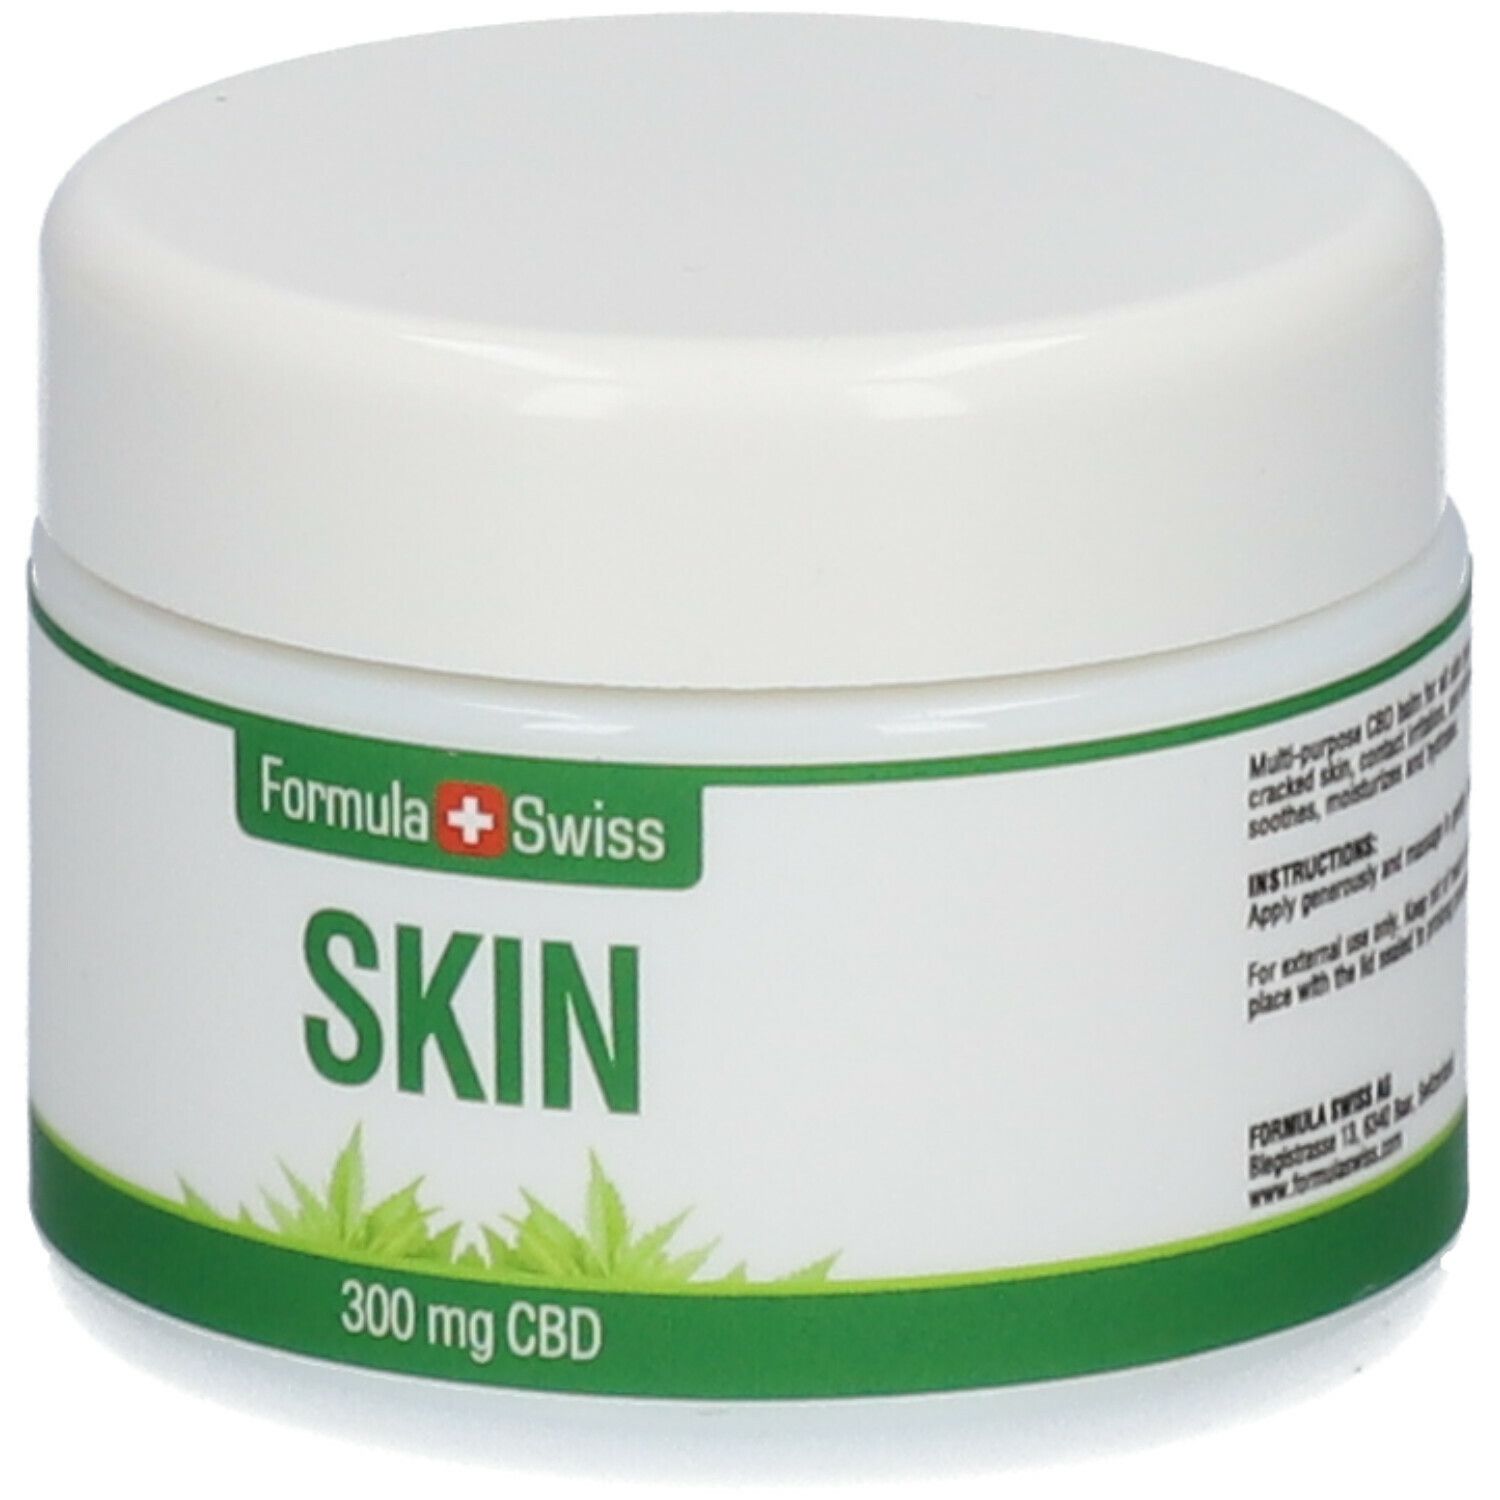 Formula Swiss CBD Skin Creme